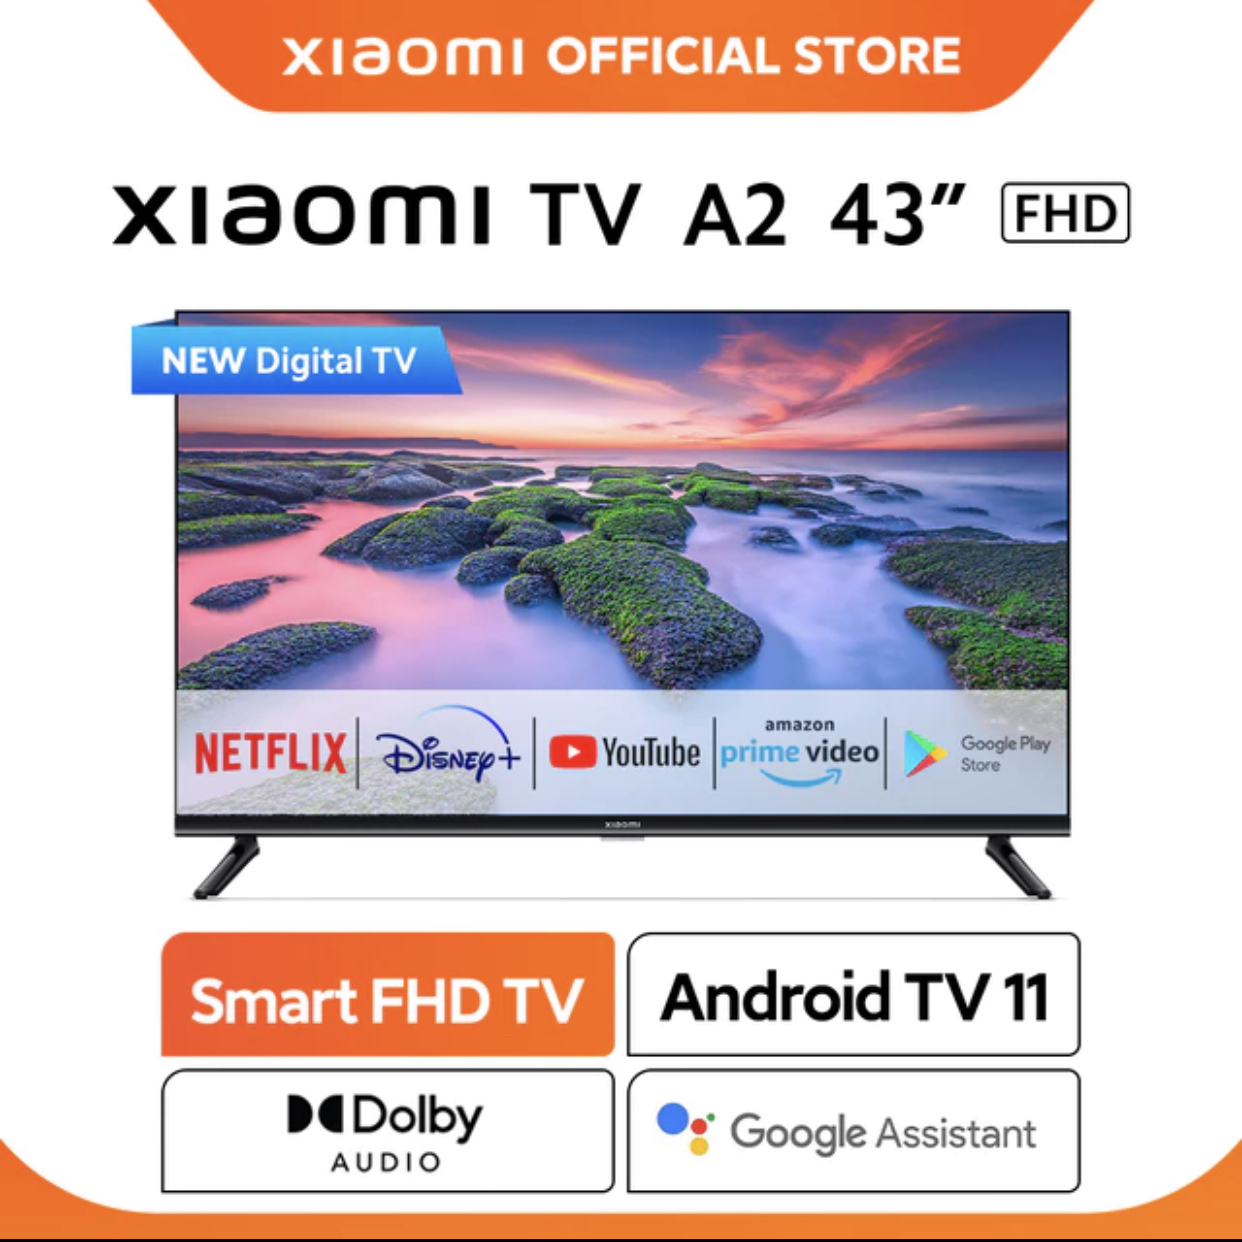 21. Xiaomi TV A2 43"